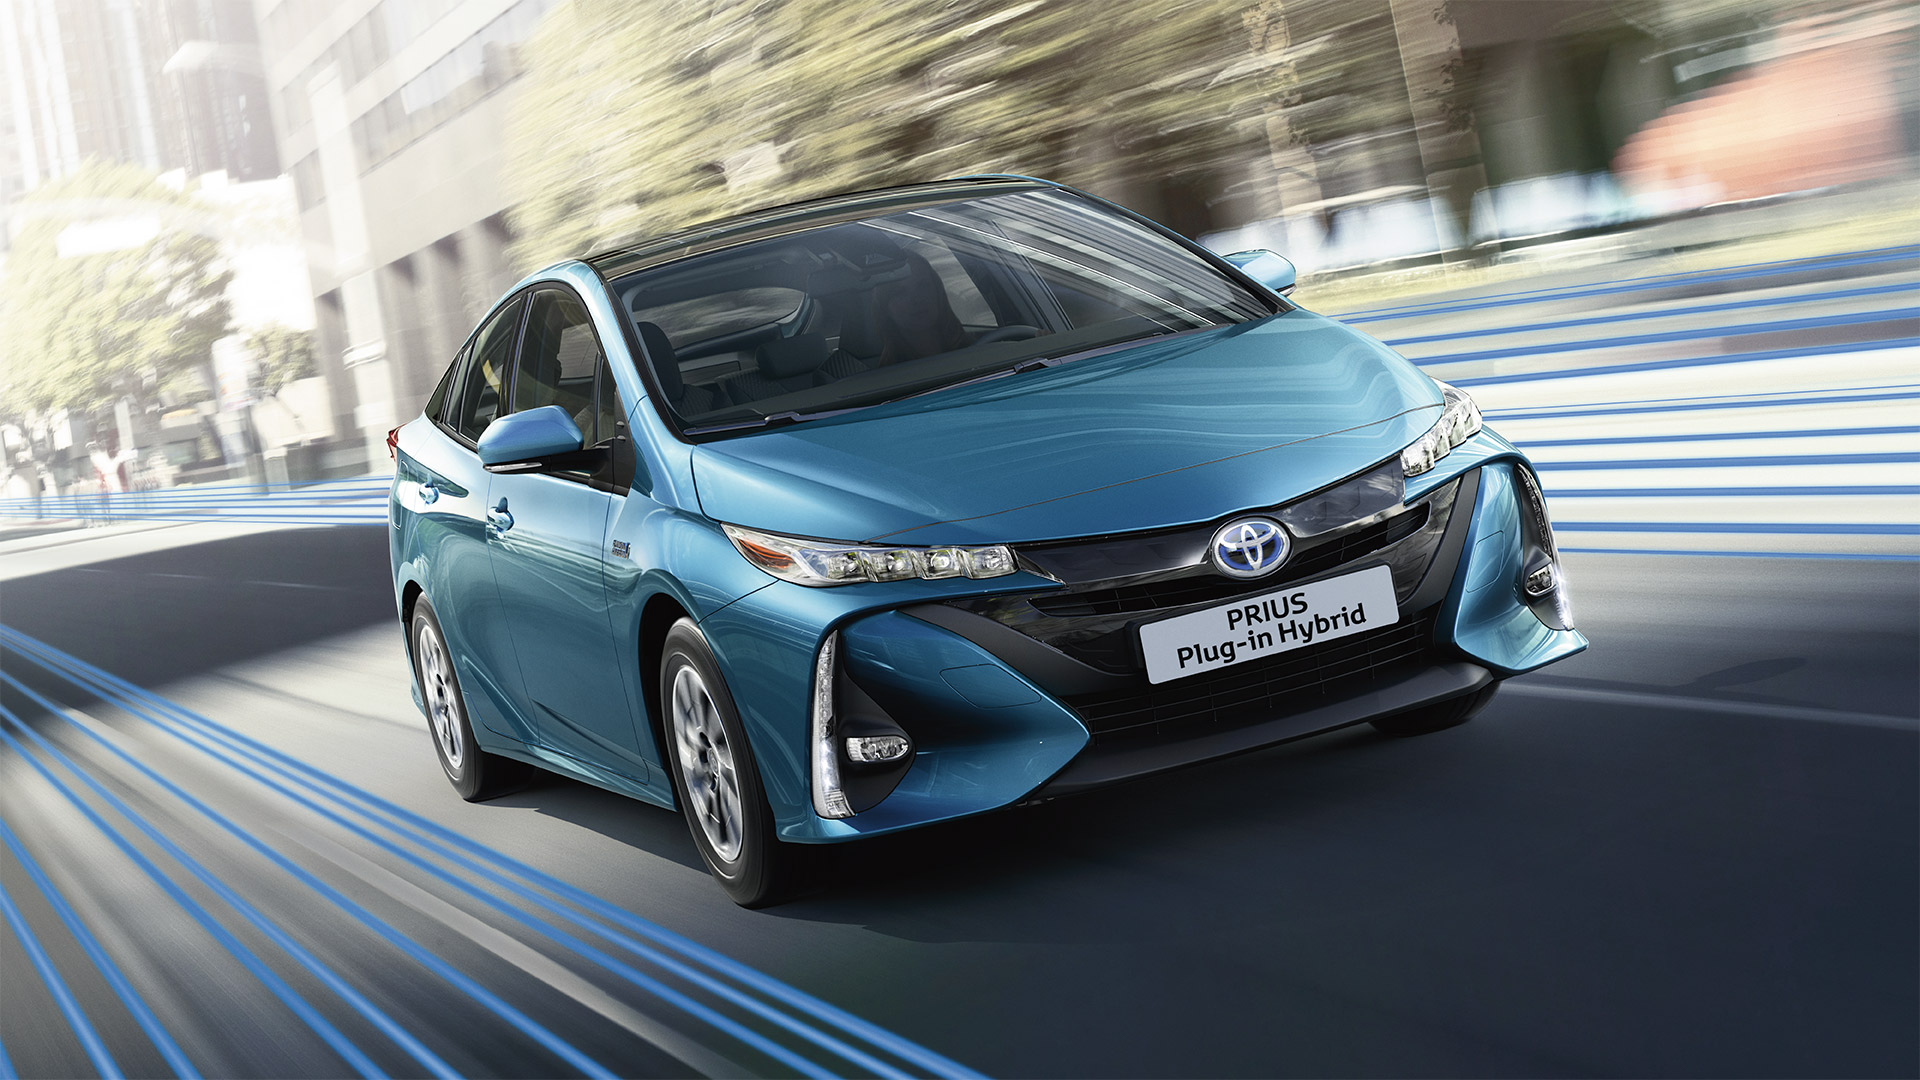 privaat markt Uitrusten Toyota Prius plug-in Hybrid | Ontdek hem nu | Toyota.nl